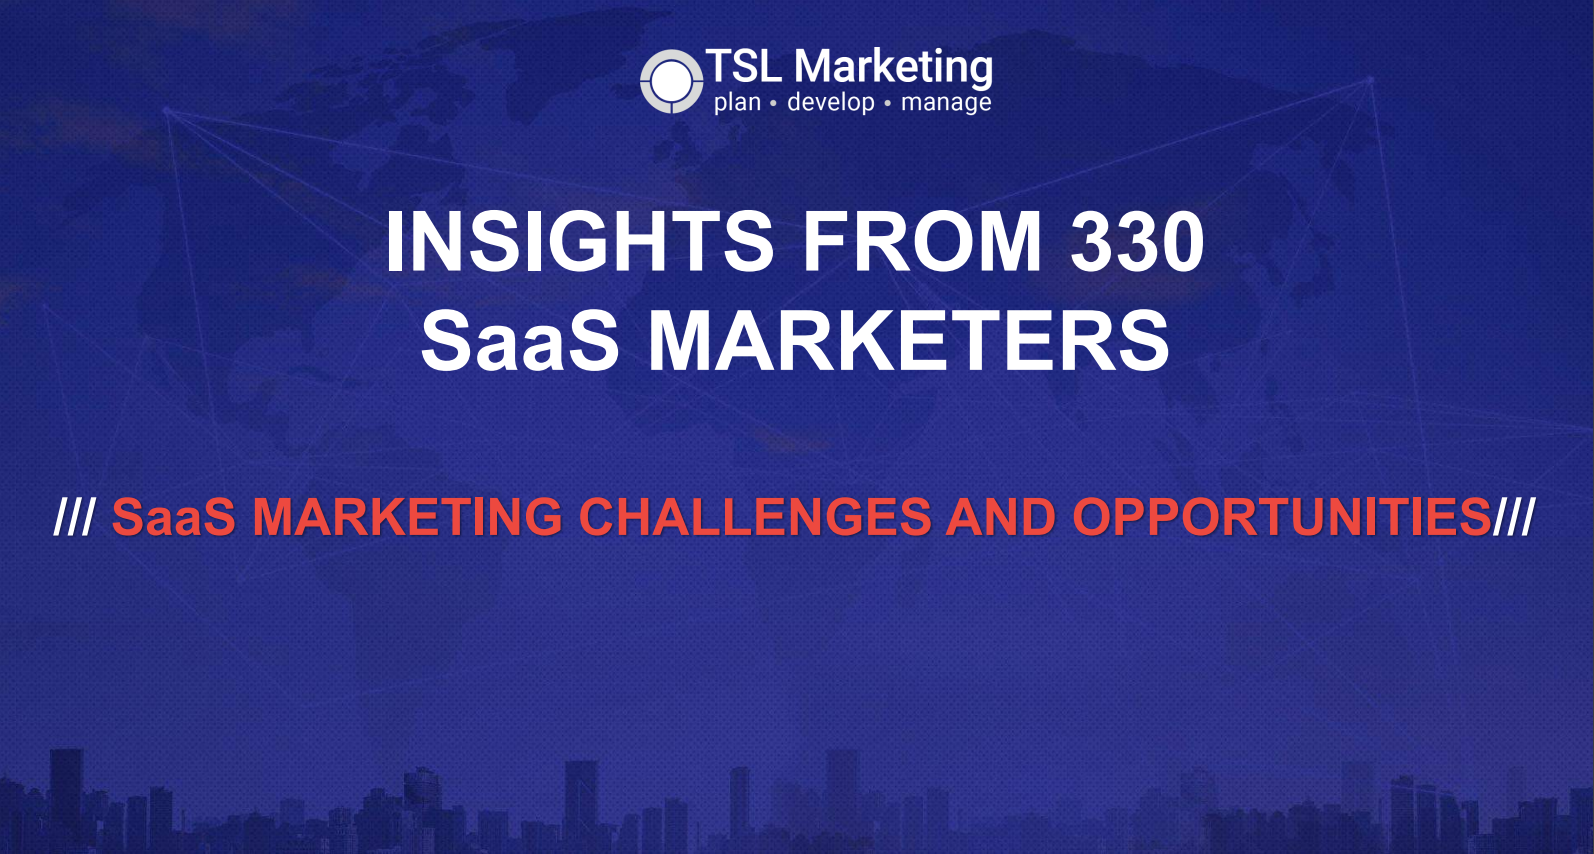 SaaS Marketing Survey Results